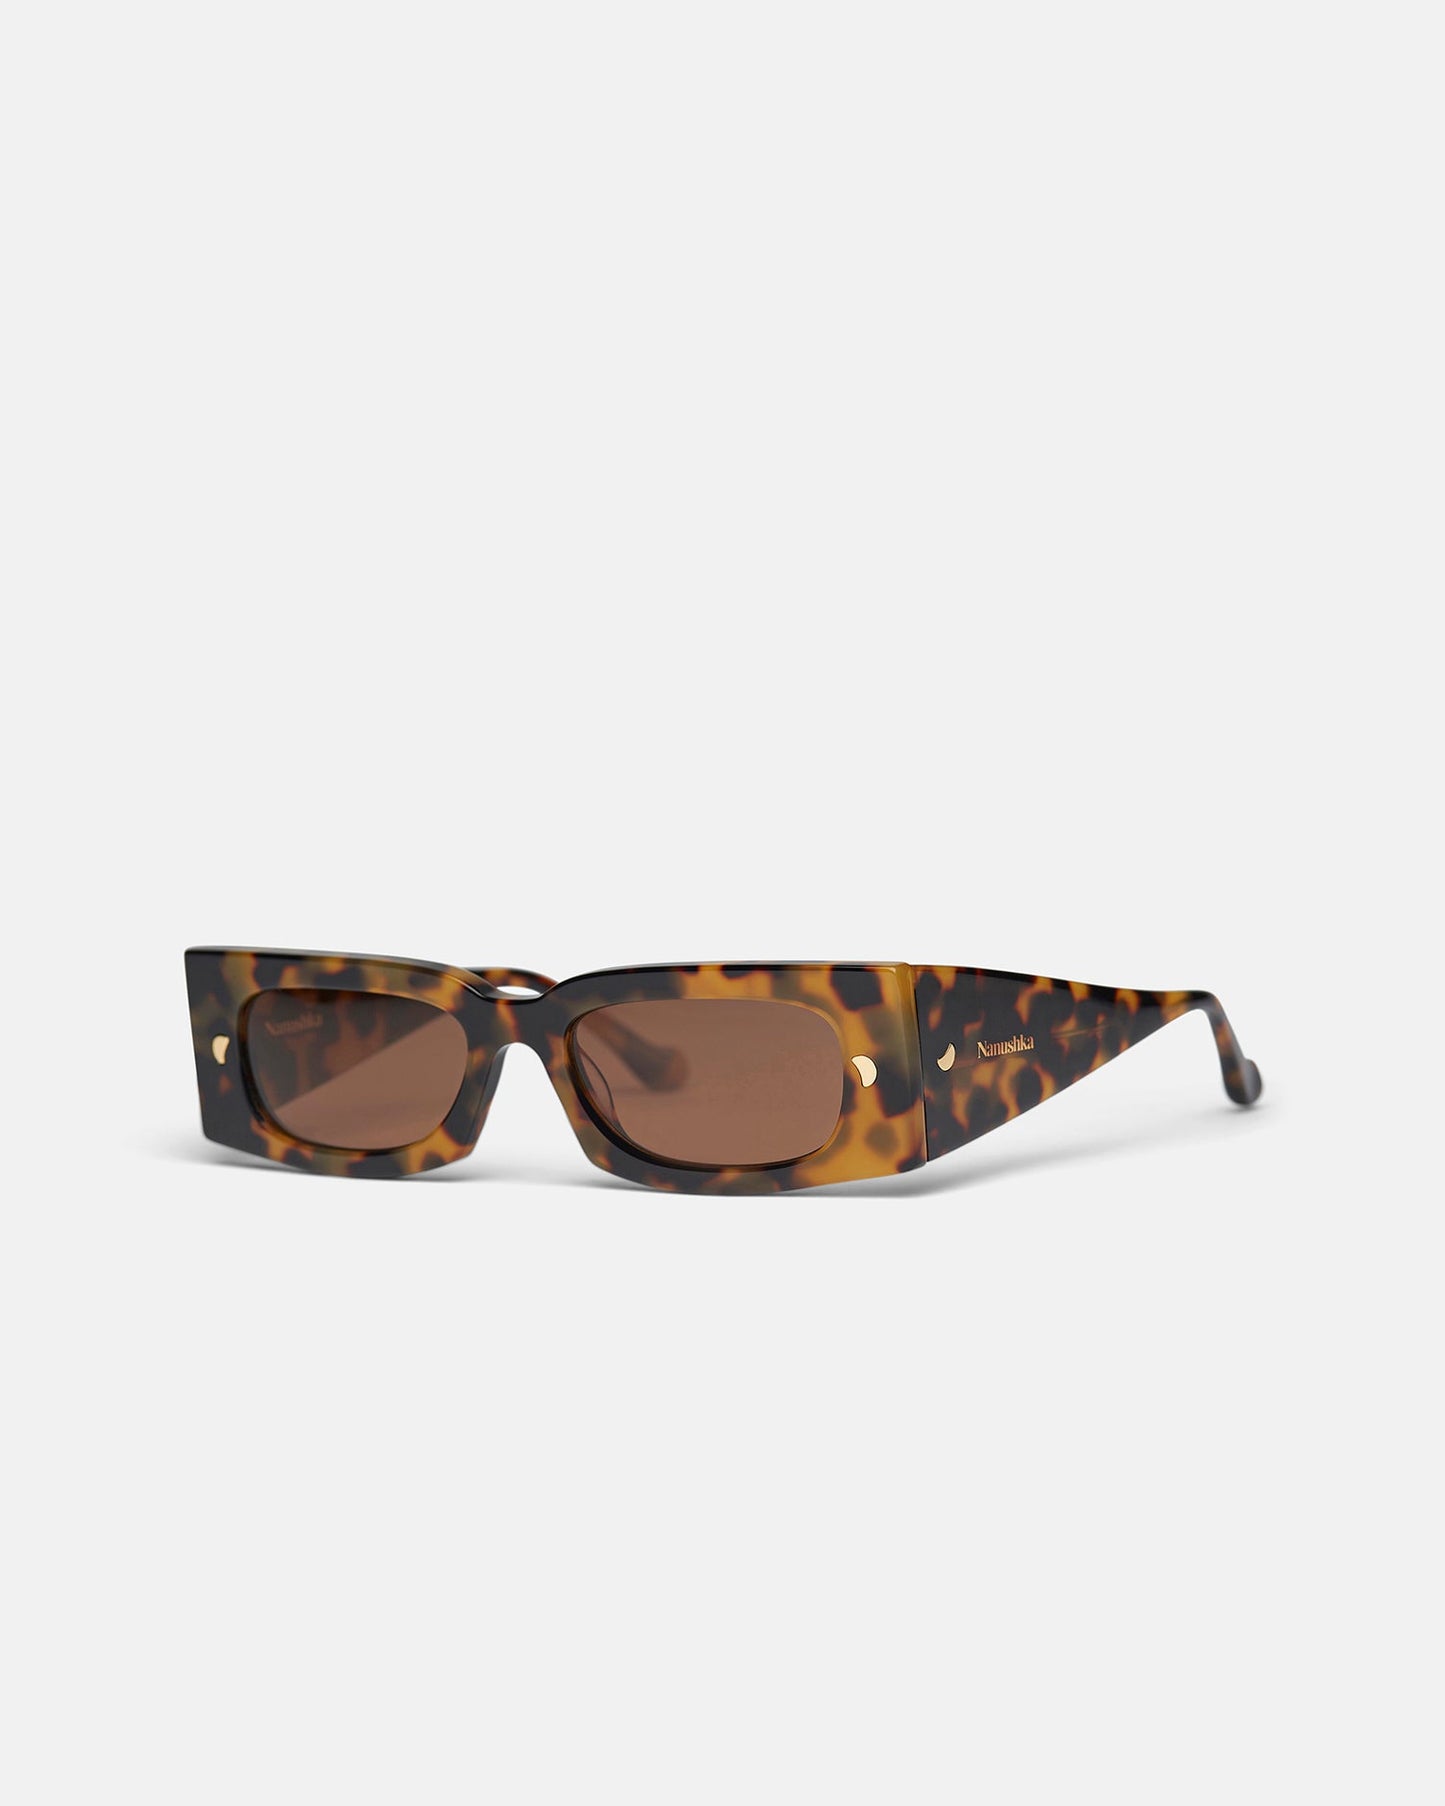 Fenna - Bio-Plastic Sunglasses - Dark Amber